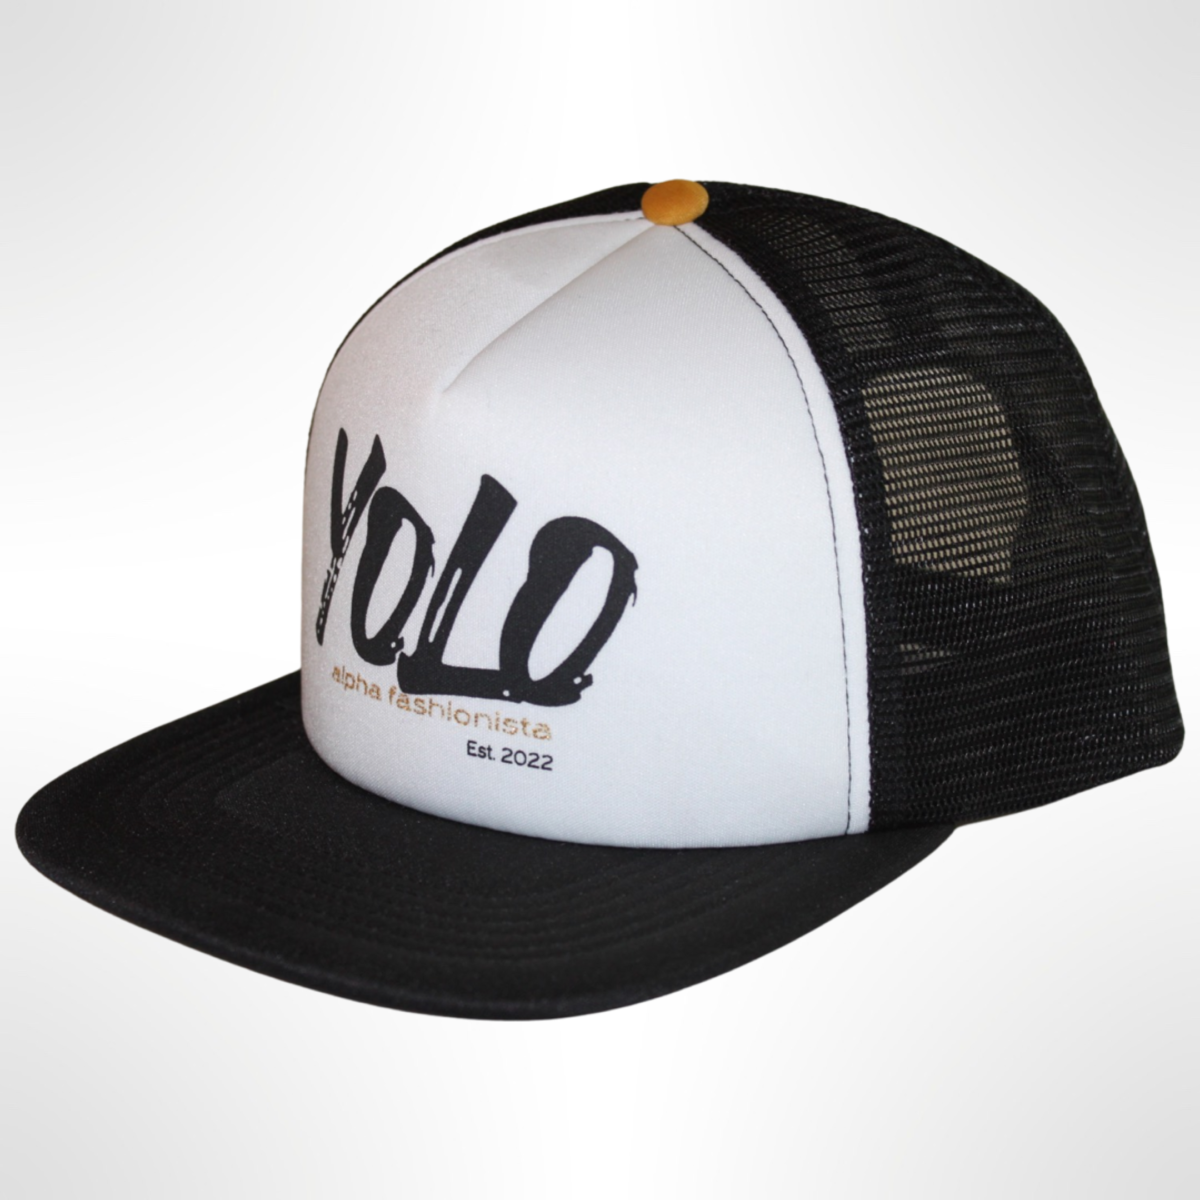 Buy Now Black White YOLO Trucker Hat Online | Alpha Fashionista | Trucker Caps